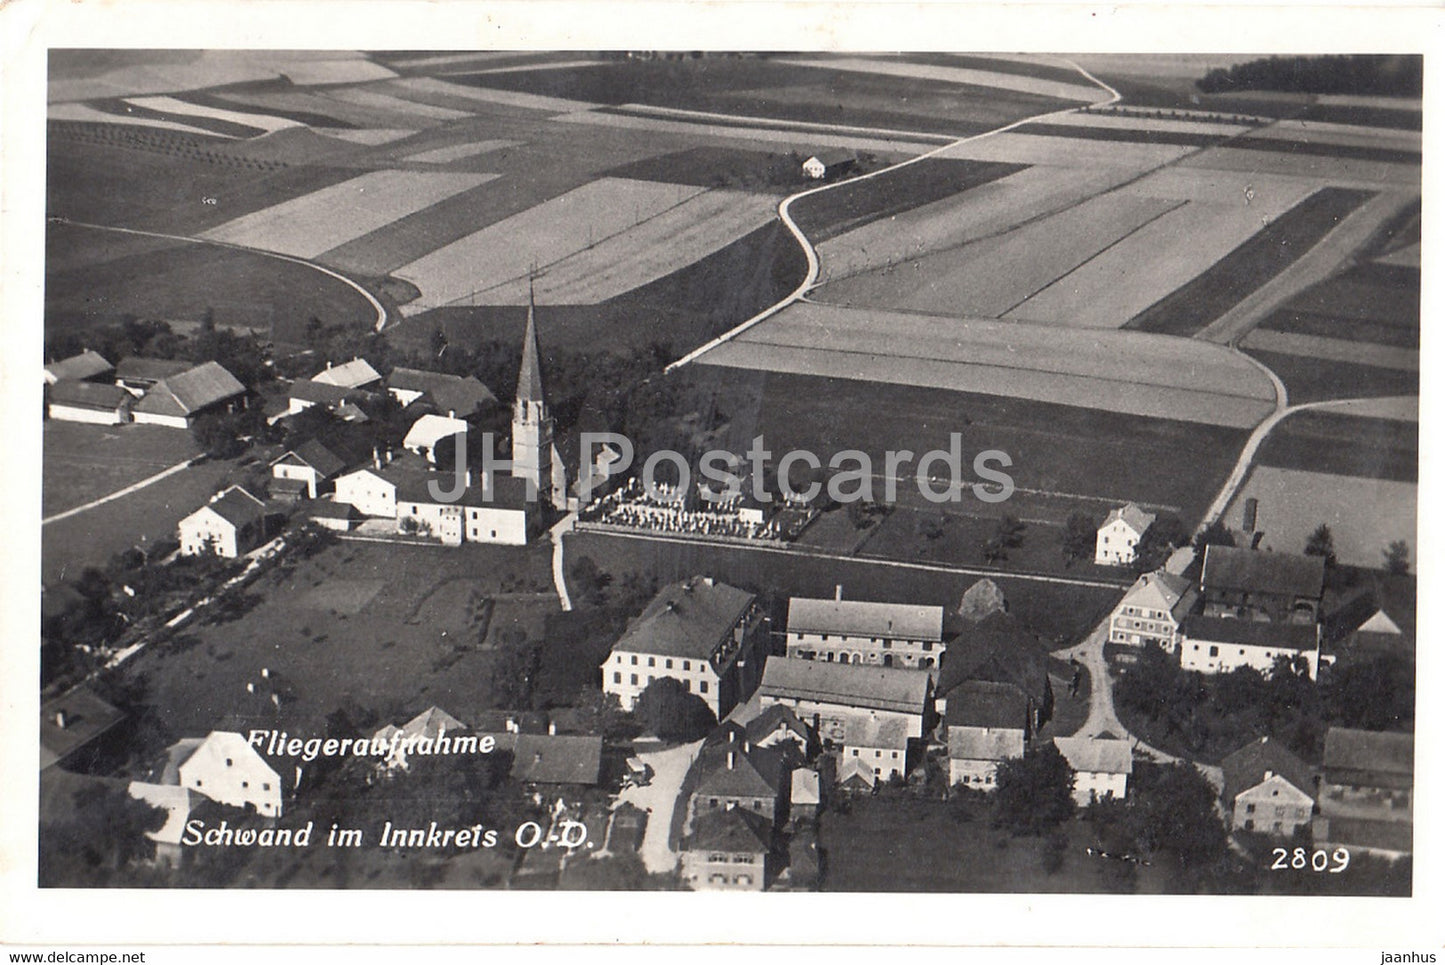 Fliegeraufnahme - Schwand im Innkreis - 2809 - old postcard - 1941 - Austria - used - JH Postcards